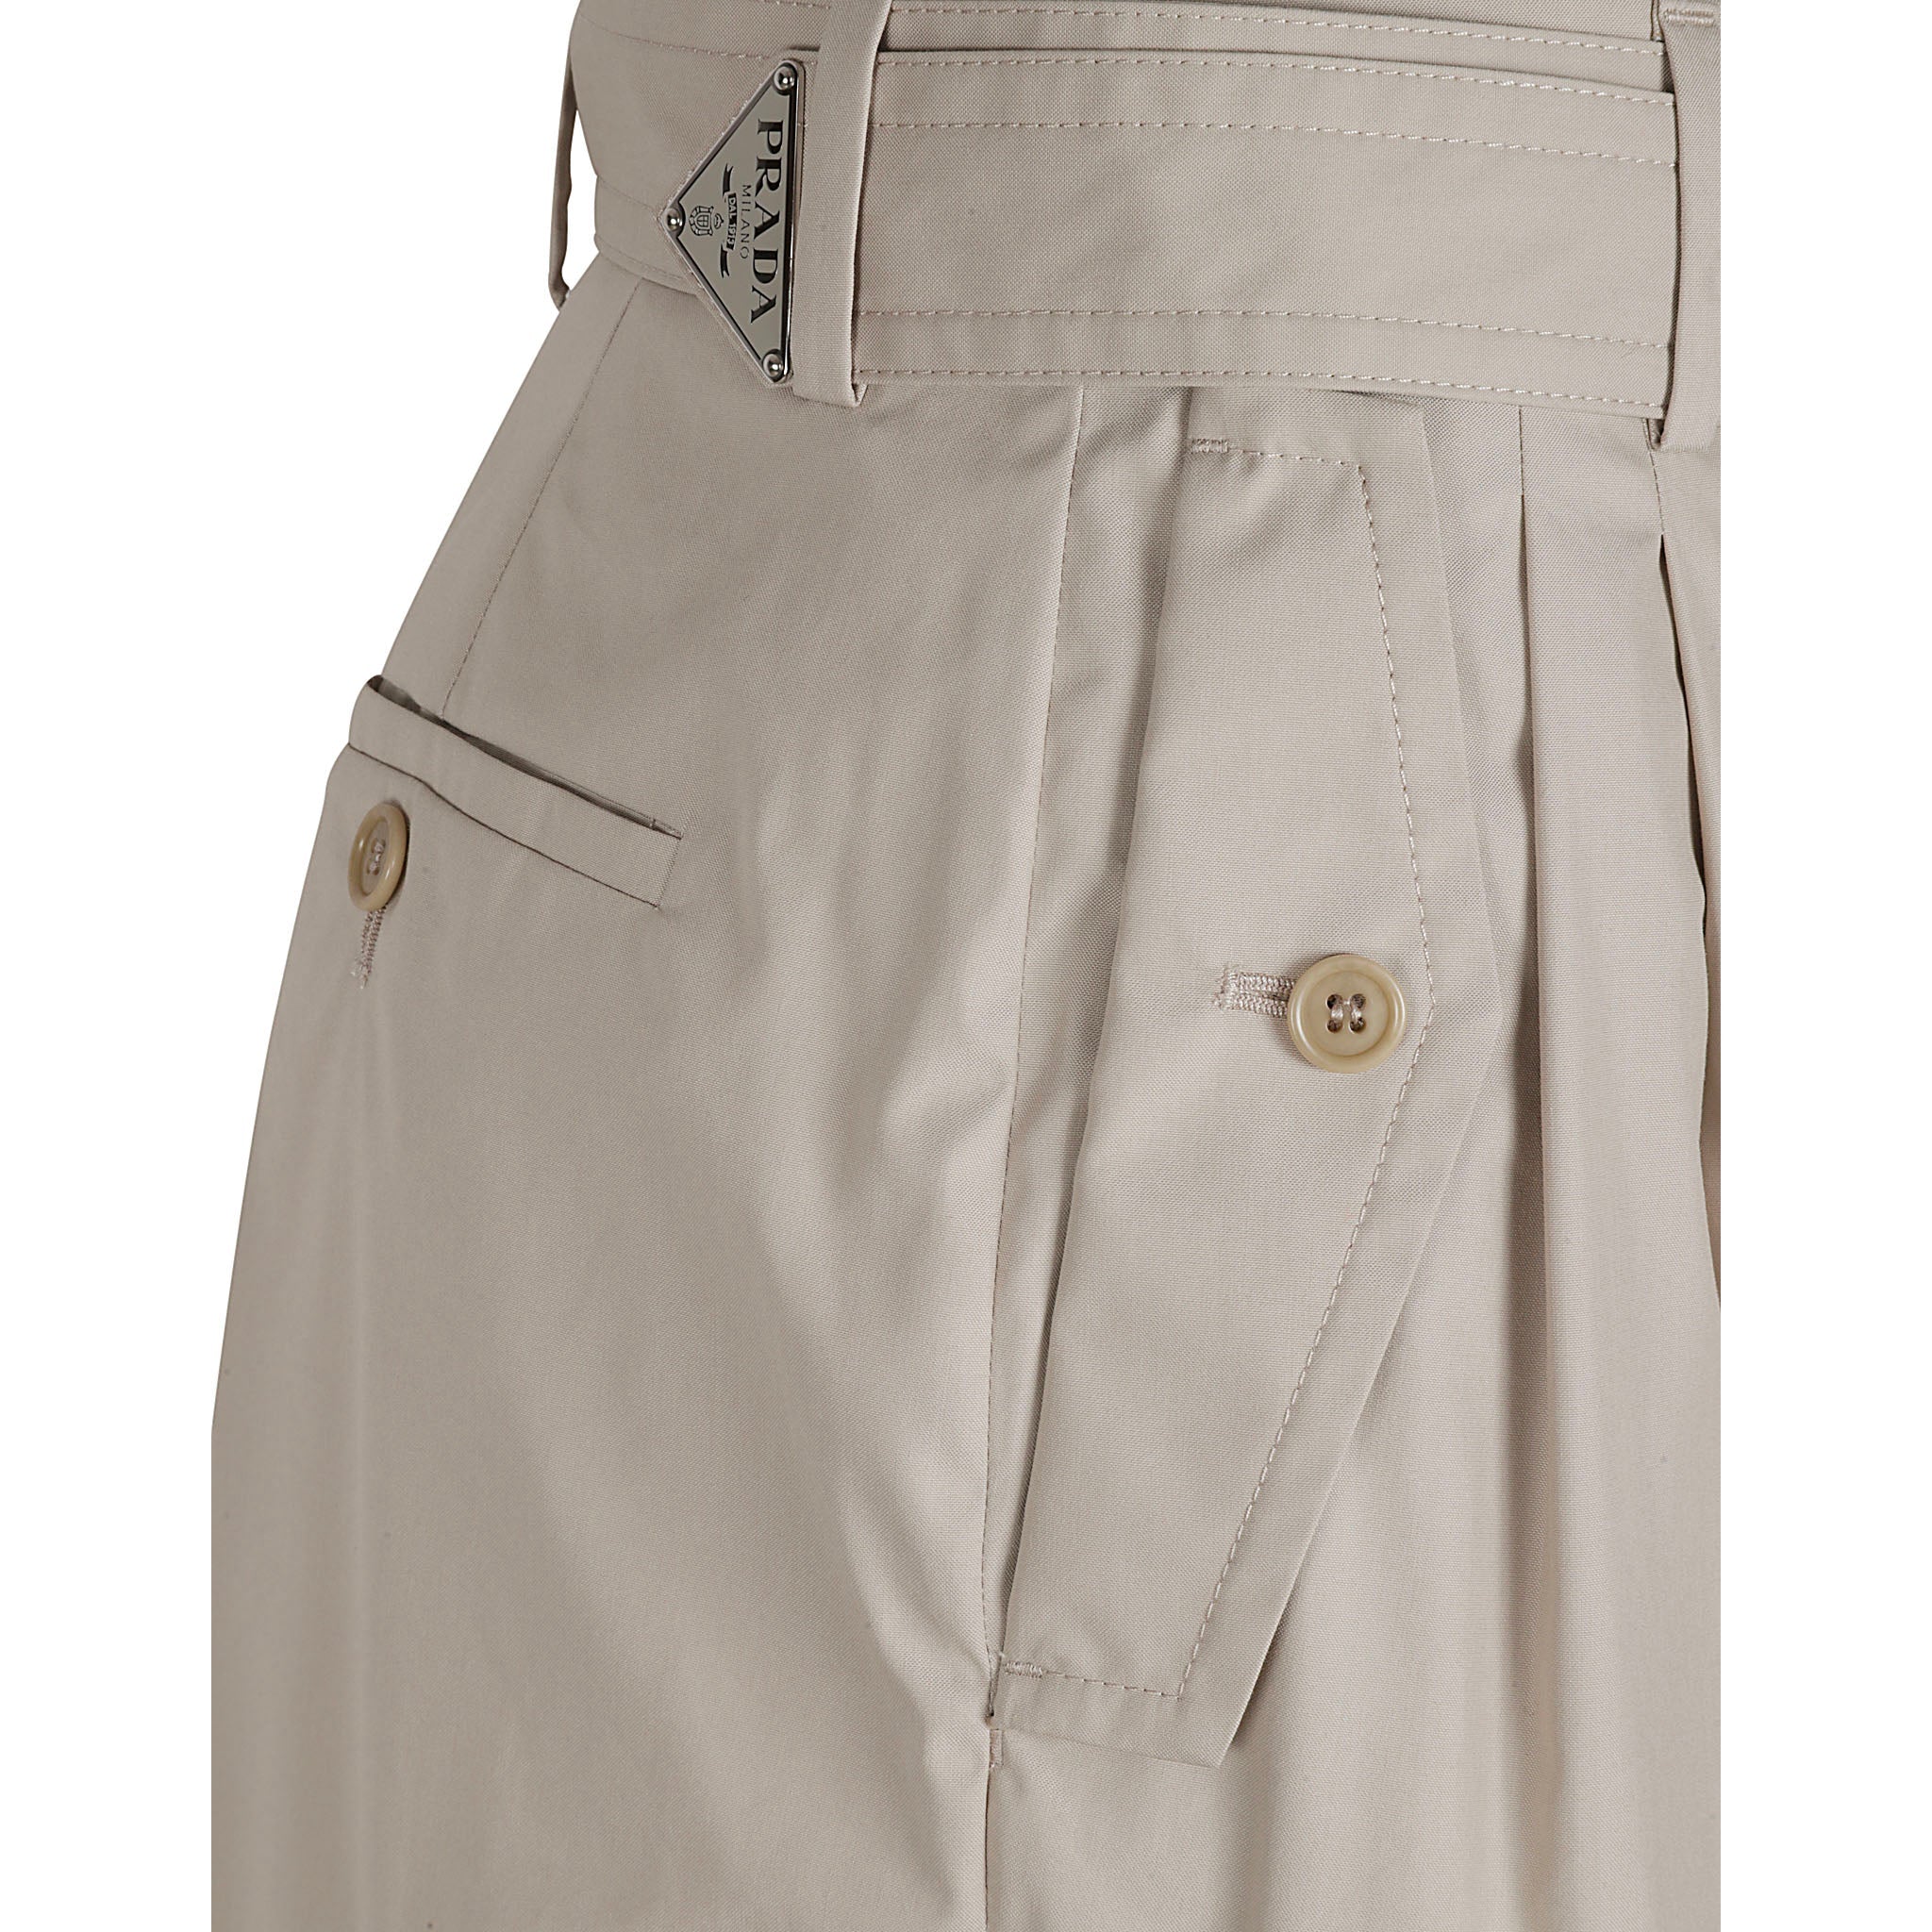 PRADA-Outlet-Sale-Prada High Waist Trousers-WOMEN CLOTHING-BEIGE-40-ARCHIVIST